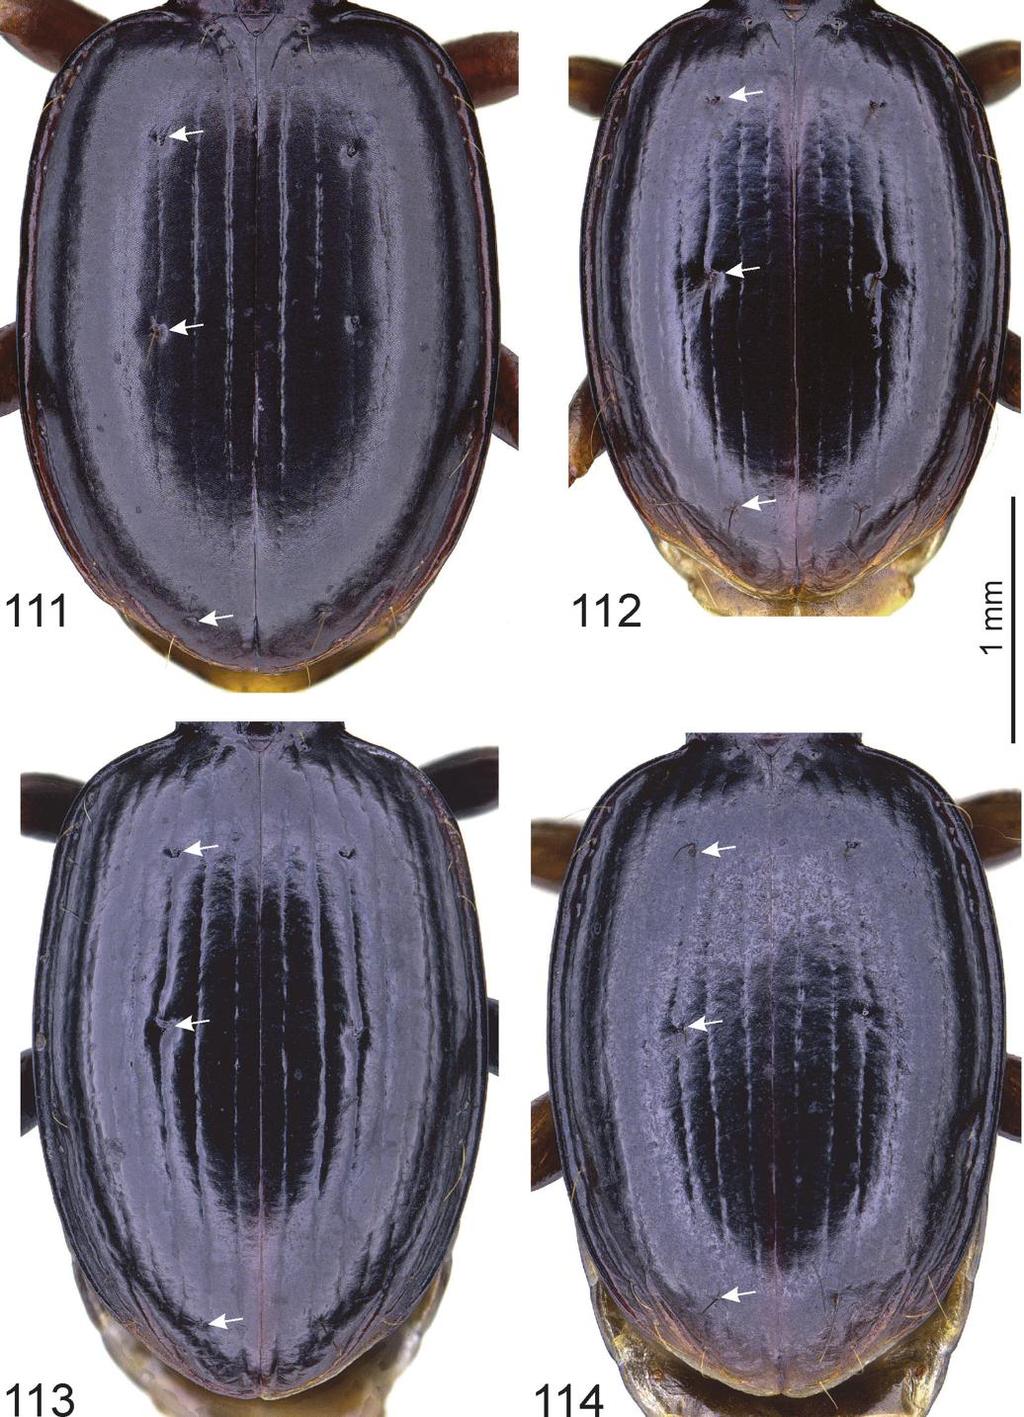 European Journal of Taxonomy 446: 1 82 (2018) Figs 111 114. Trechus spp., elytra. 111. T. haggei sp. nov., paratype,. 112. T. tragelaphus sp. nov., holotype. 113.